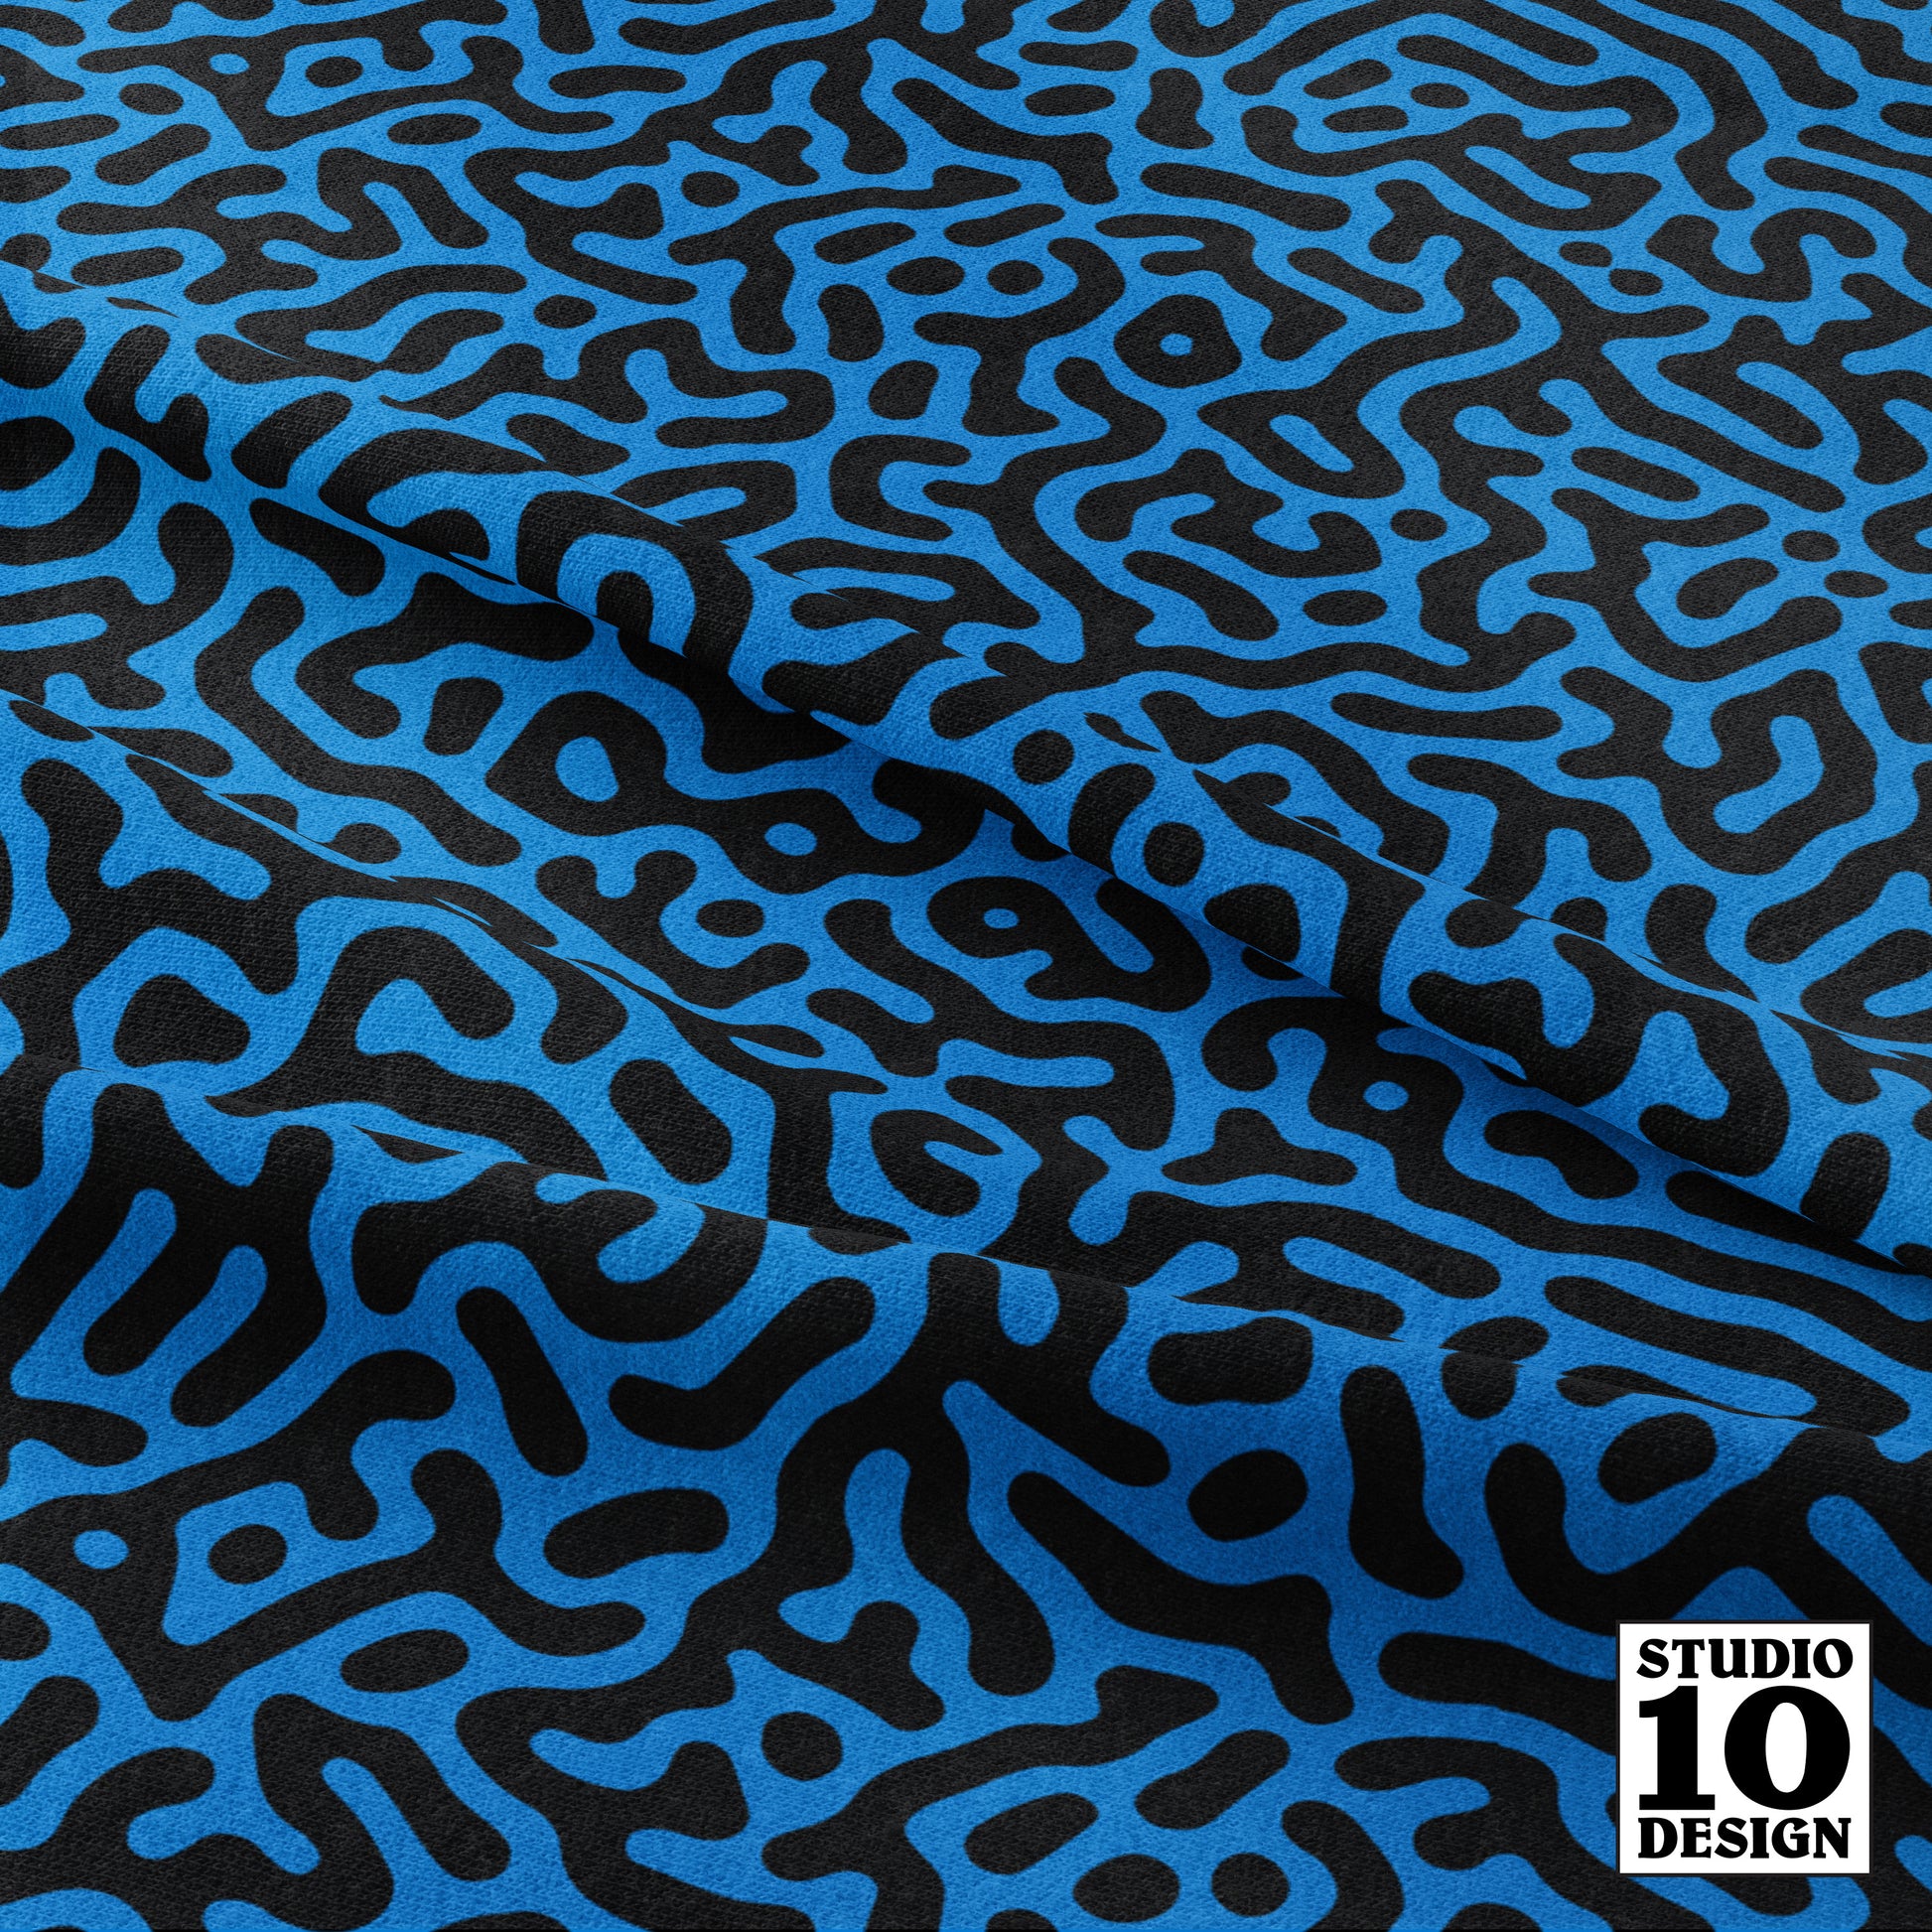 Turing Pattern I: Black + Bluebell Printed Fabric by Studio Ten Design